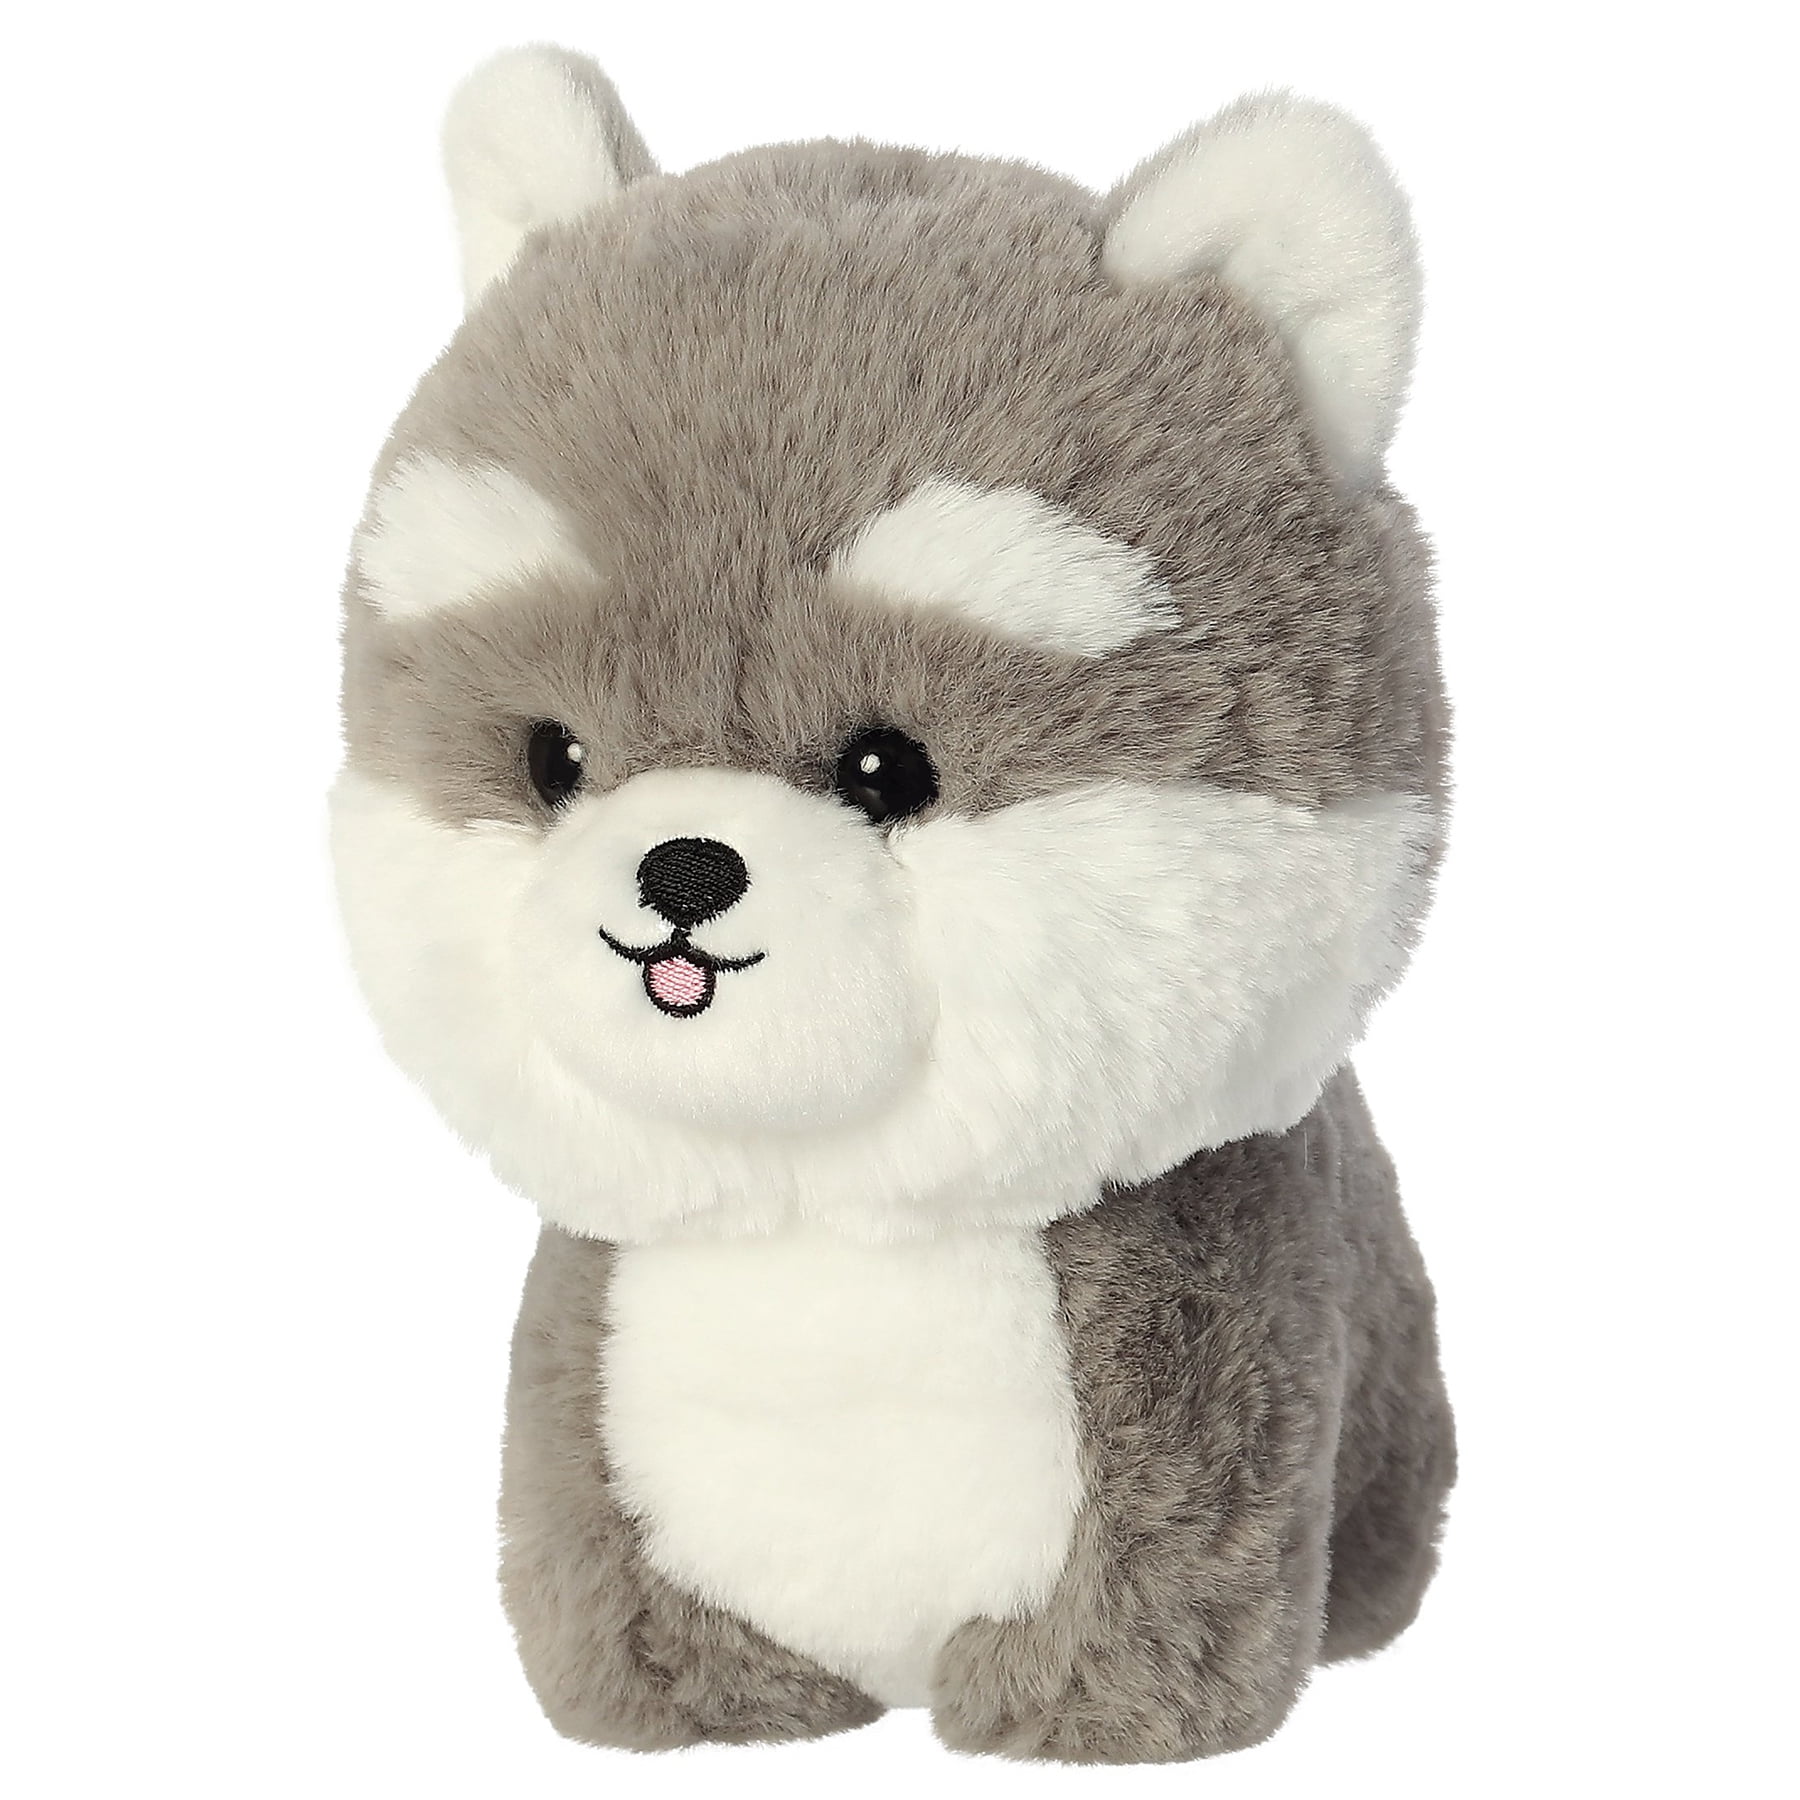 TheMogan Brown Poodle Puppy Dog Teddy Pet Plush Stuffed Animal Toy Kids Gift 7" 